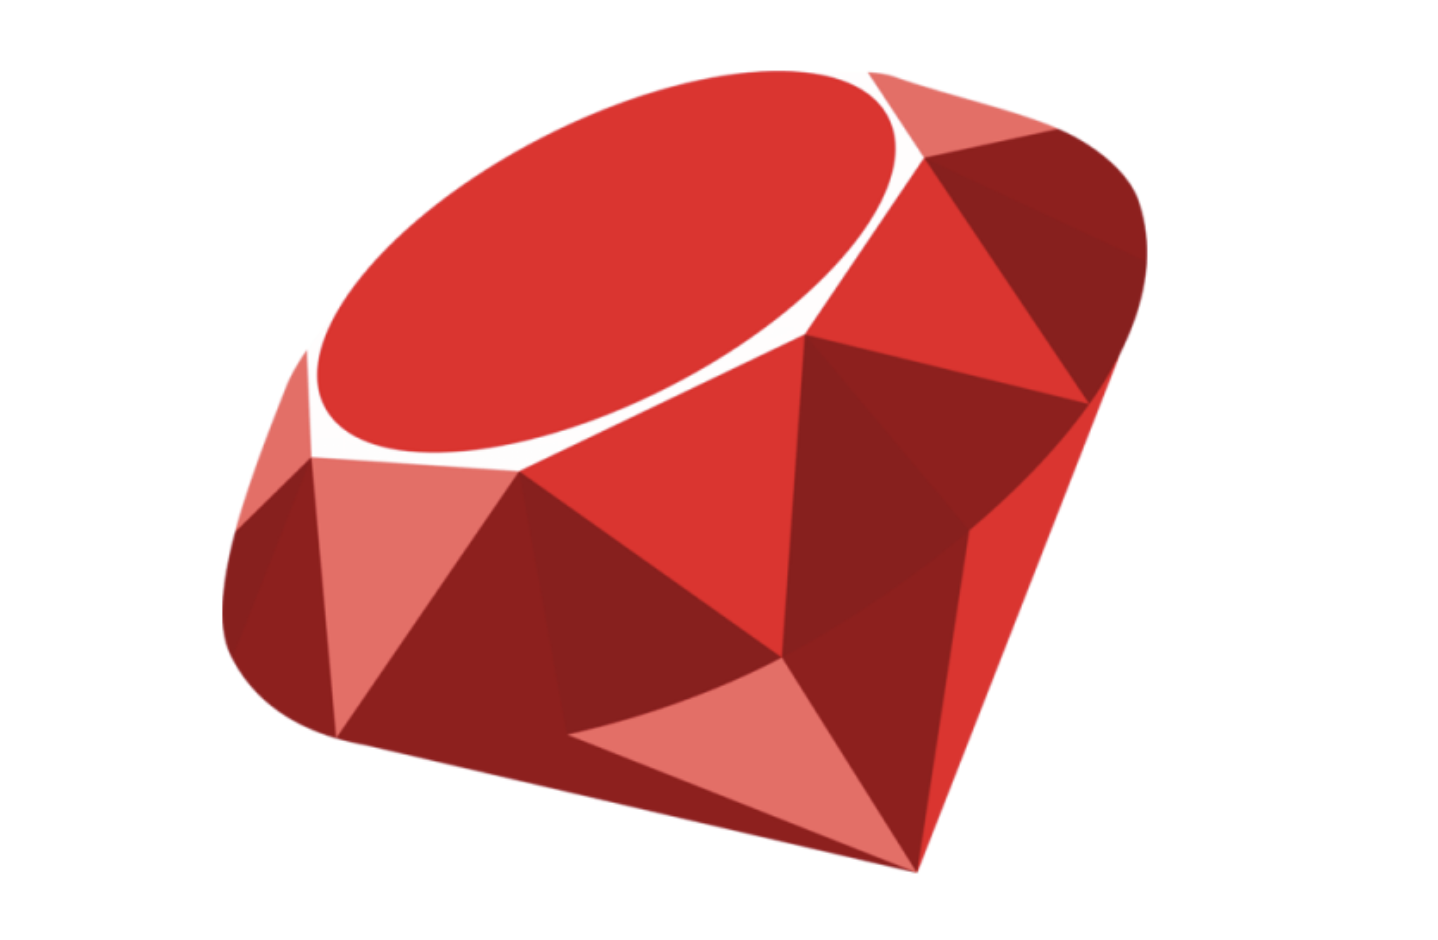 Ruby On Railsでできることとは ライブラリの例や特徴を解説 テックキャンプ ブログ